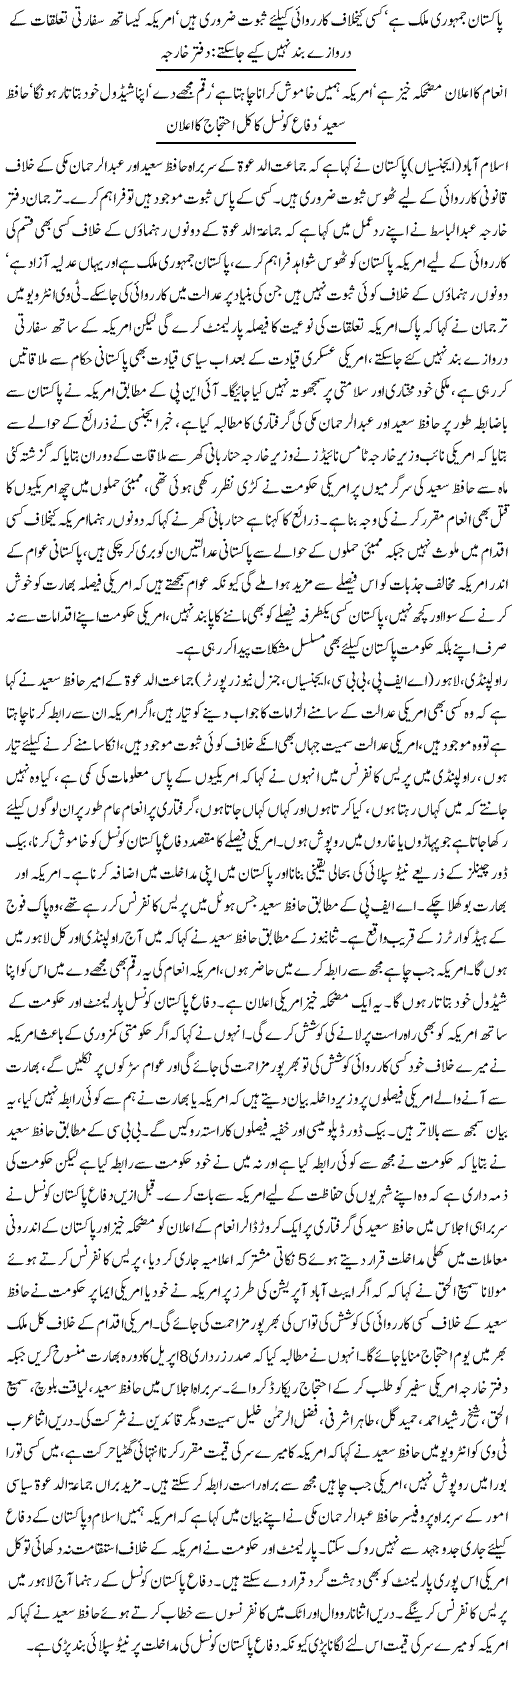 Pakistan Demands For Proofs Against Hafiz Saeed - News in Urdu